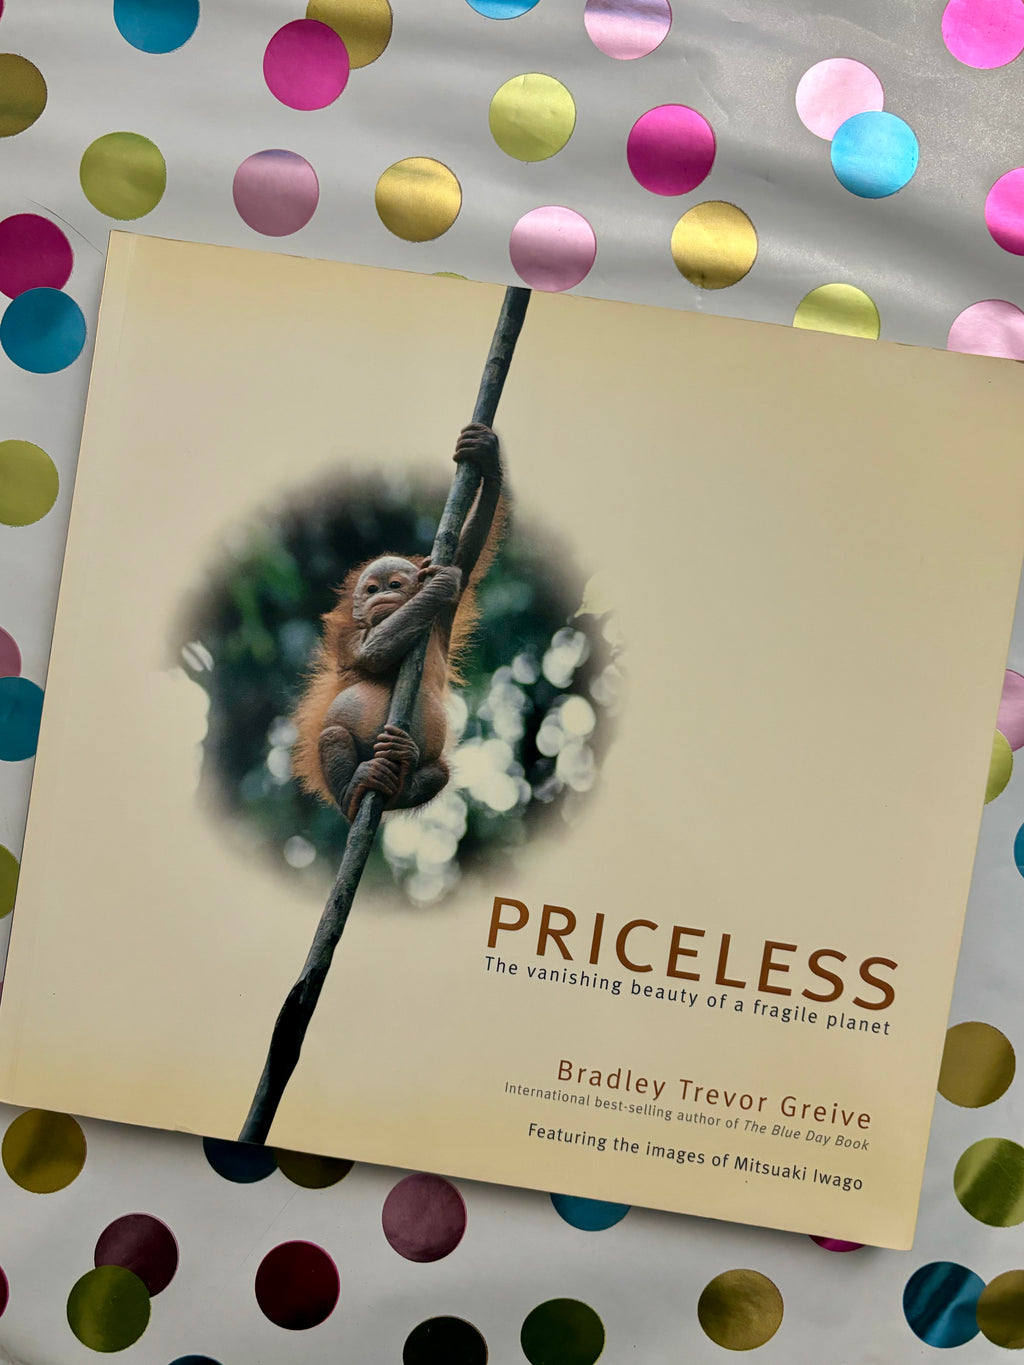 Priceless: The Vanishing Beauty of a Fragile Planet- By Bradley Trevor Greive